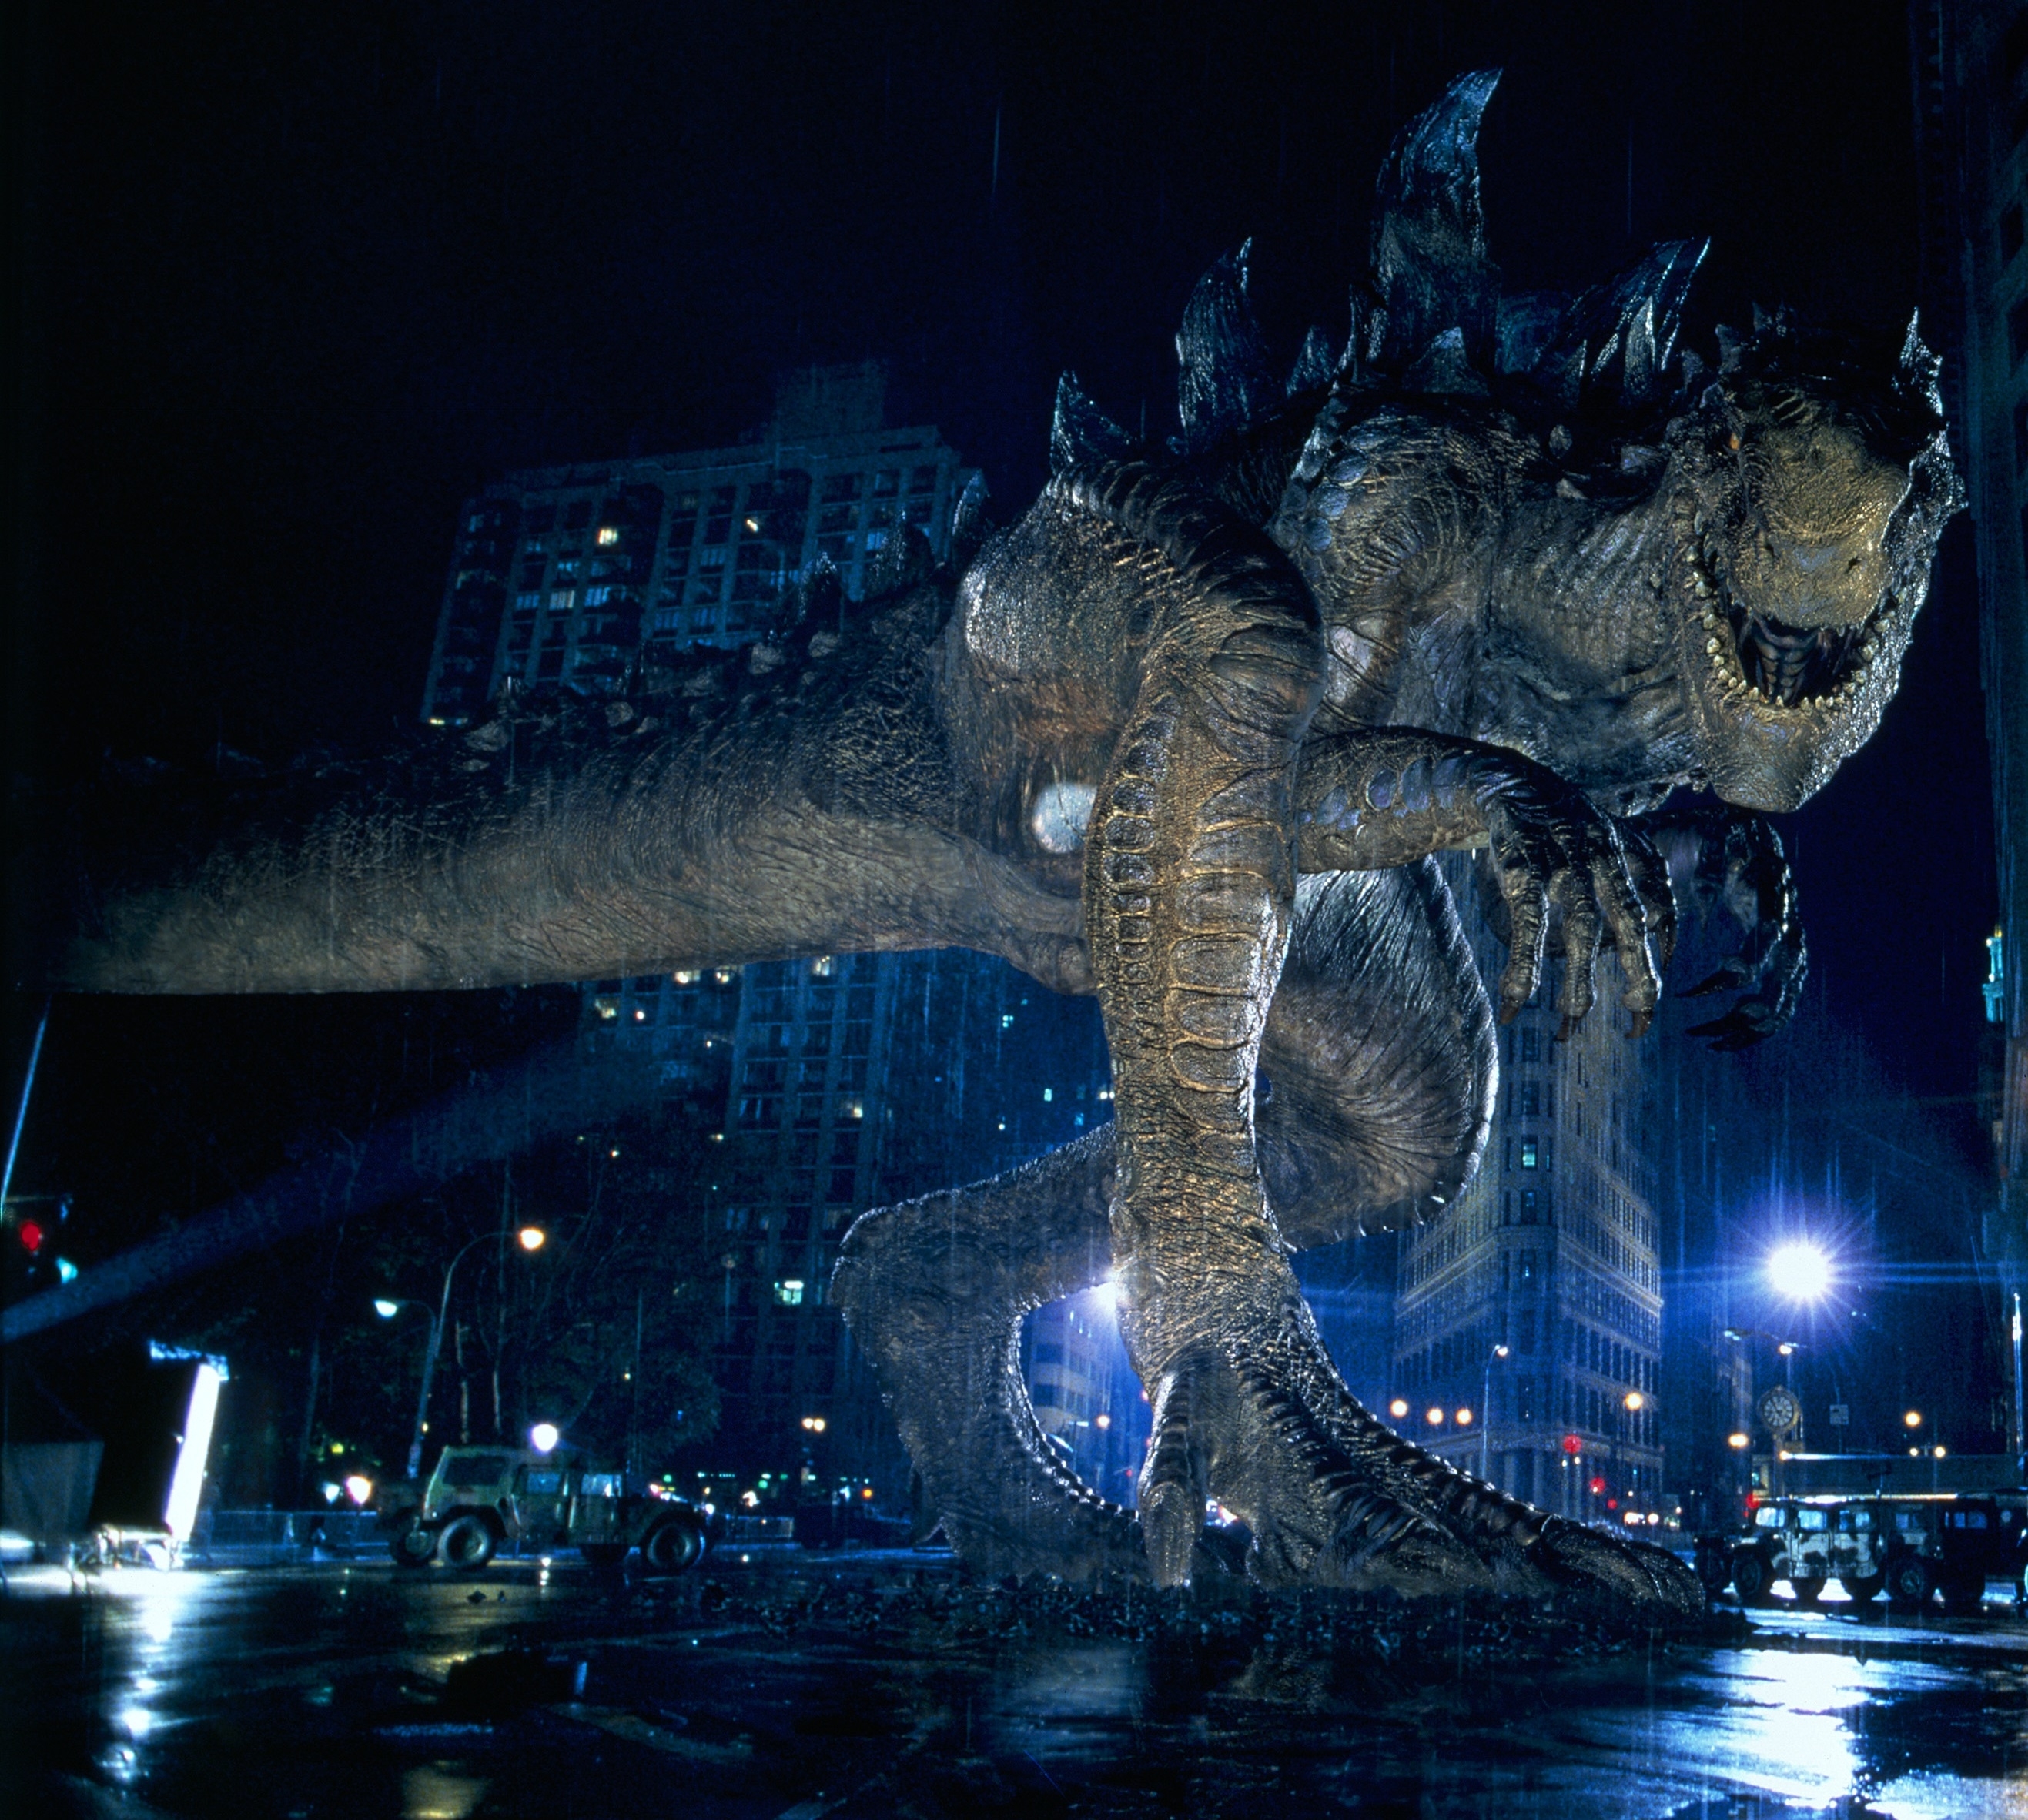 An animatronic dinosaur statue towers over an urban street at night